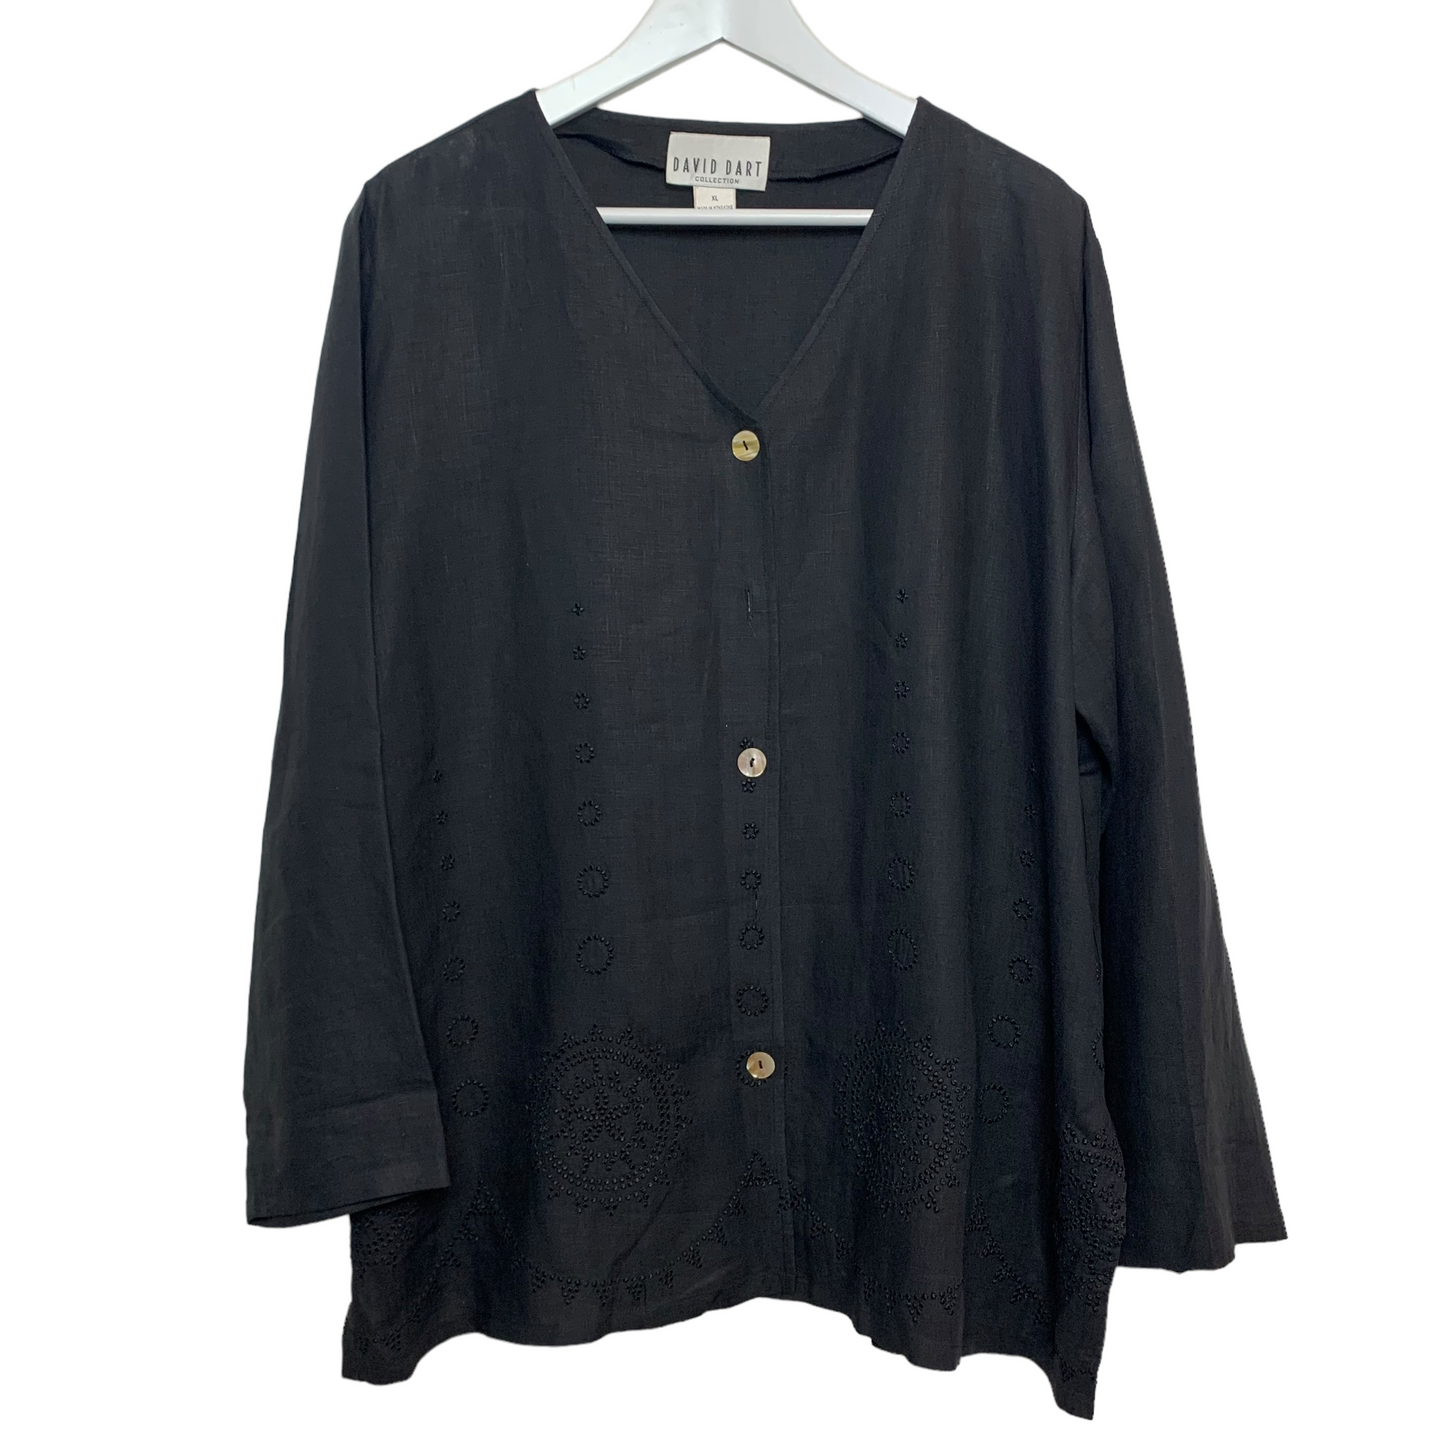 Vintage David Dart Black Linen Button Down Blouse Long Sleeve XL